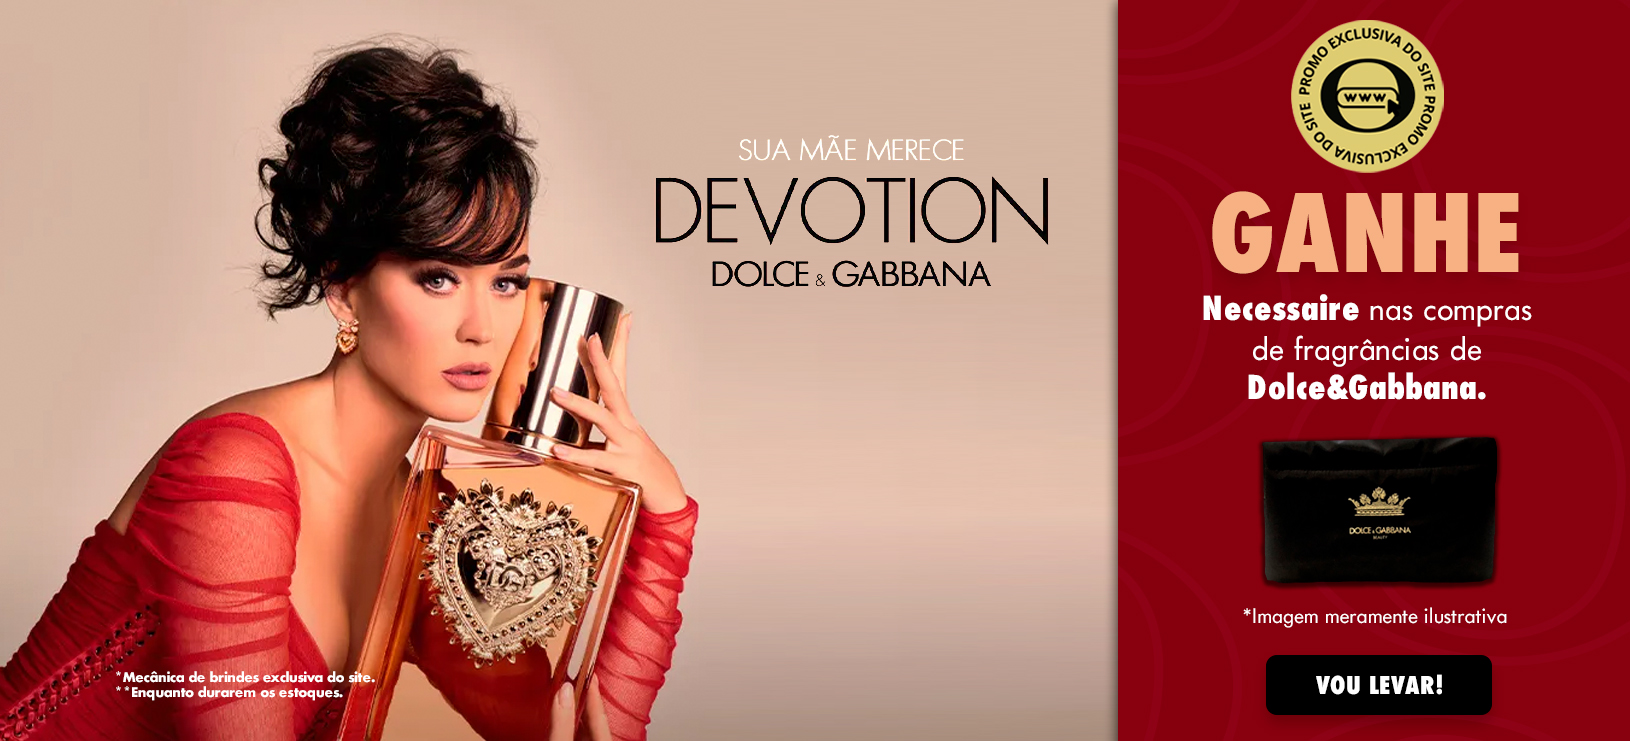 dolce-gabbana-devotion-banner-desktop